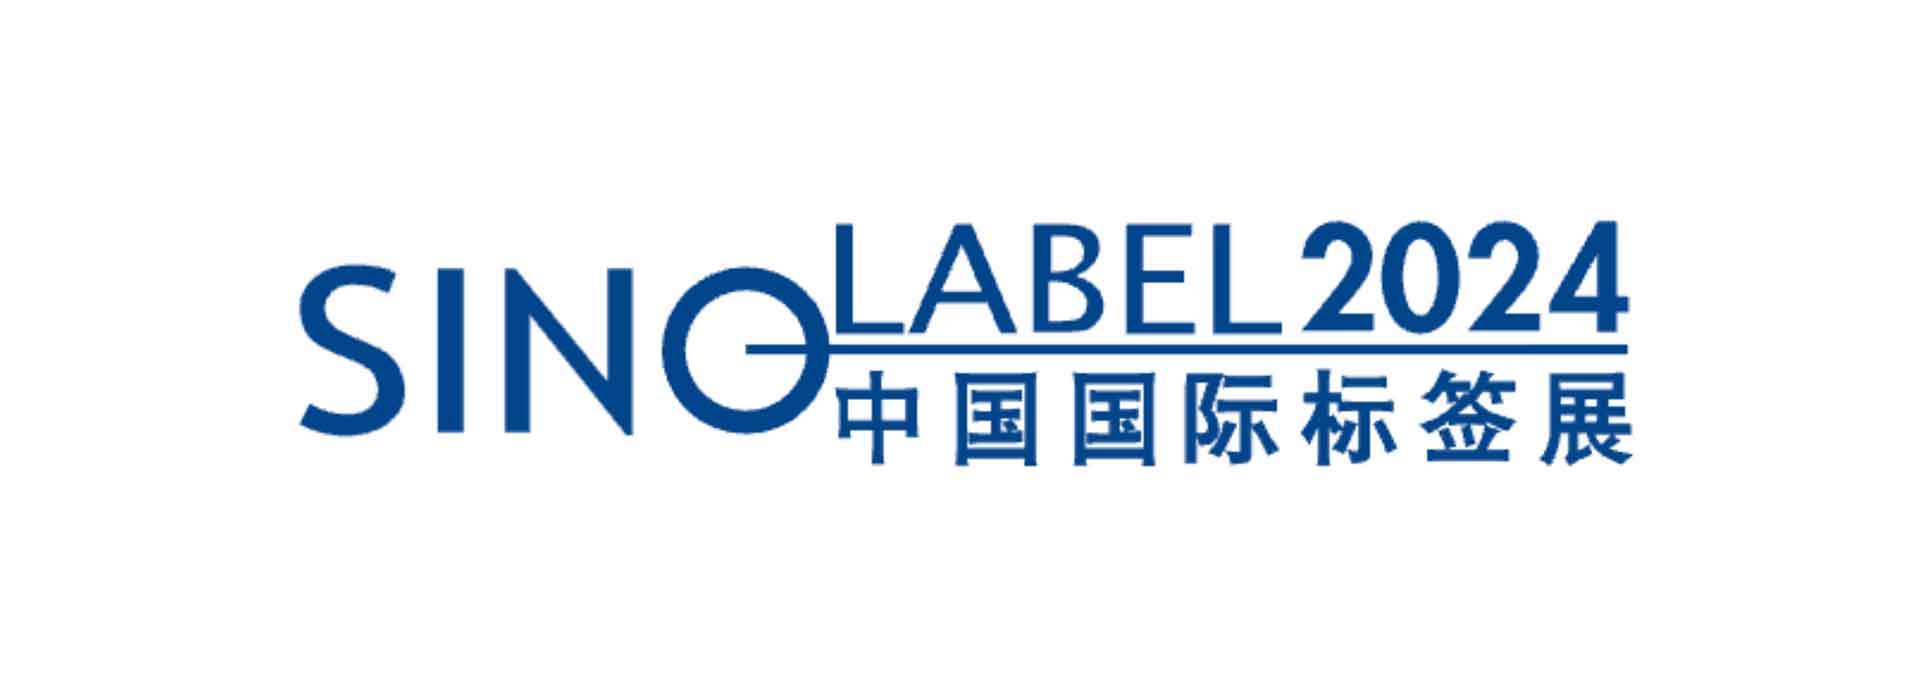 The 30th Sino Label Printing